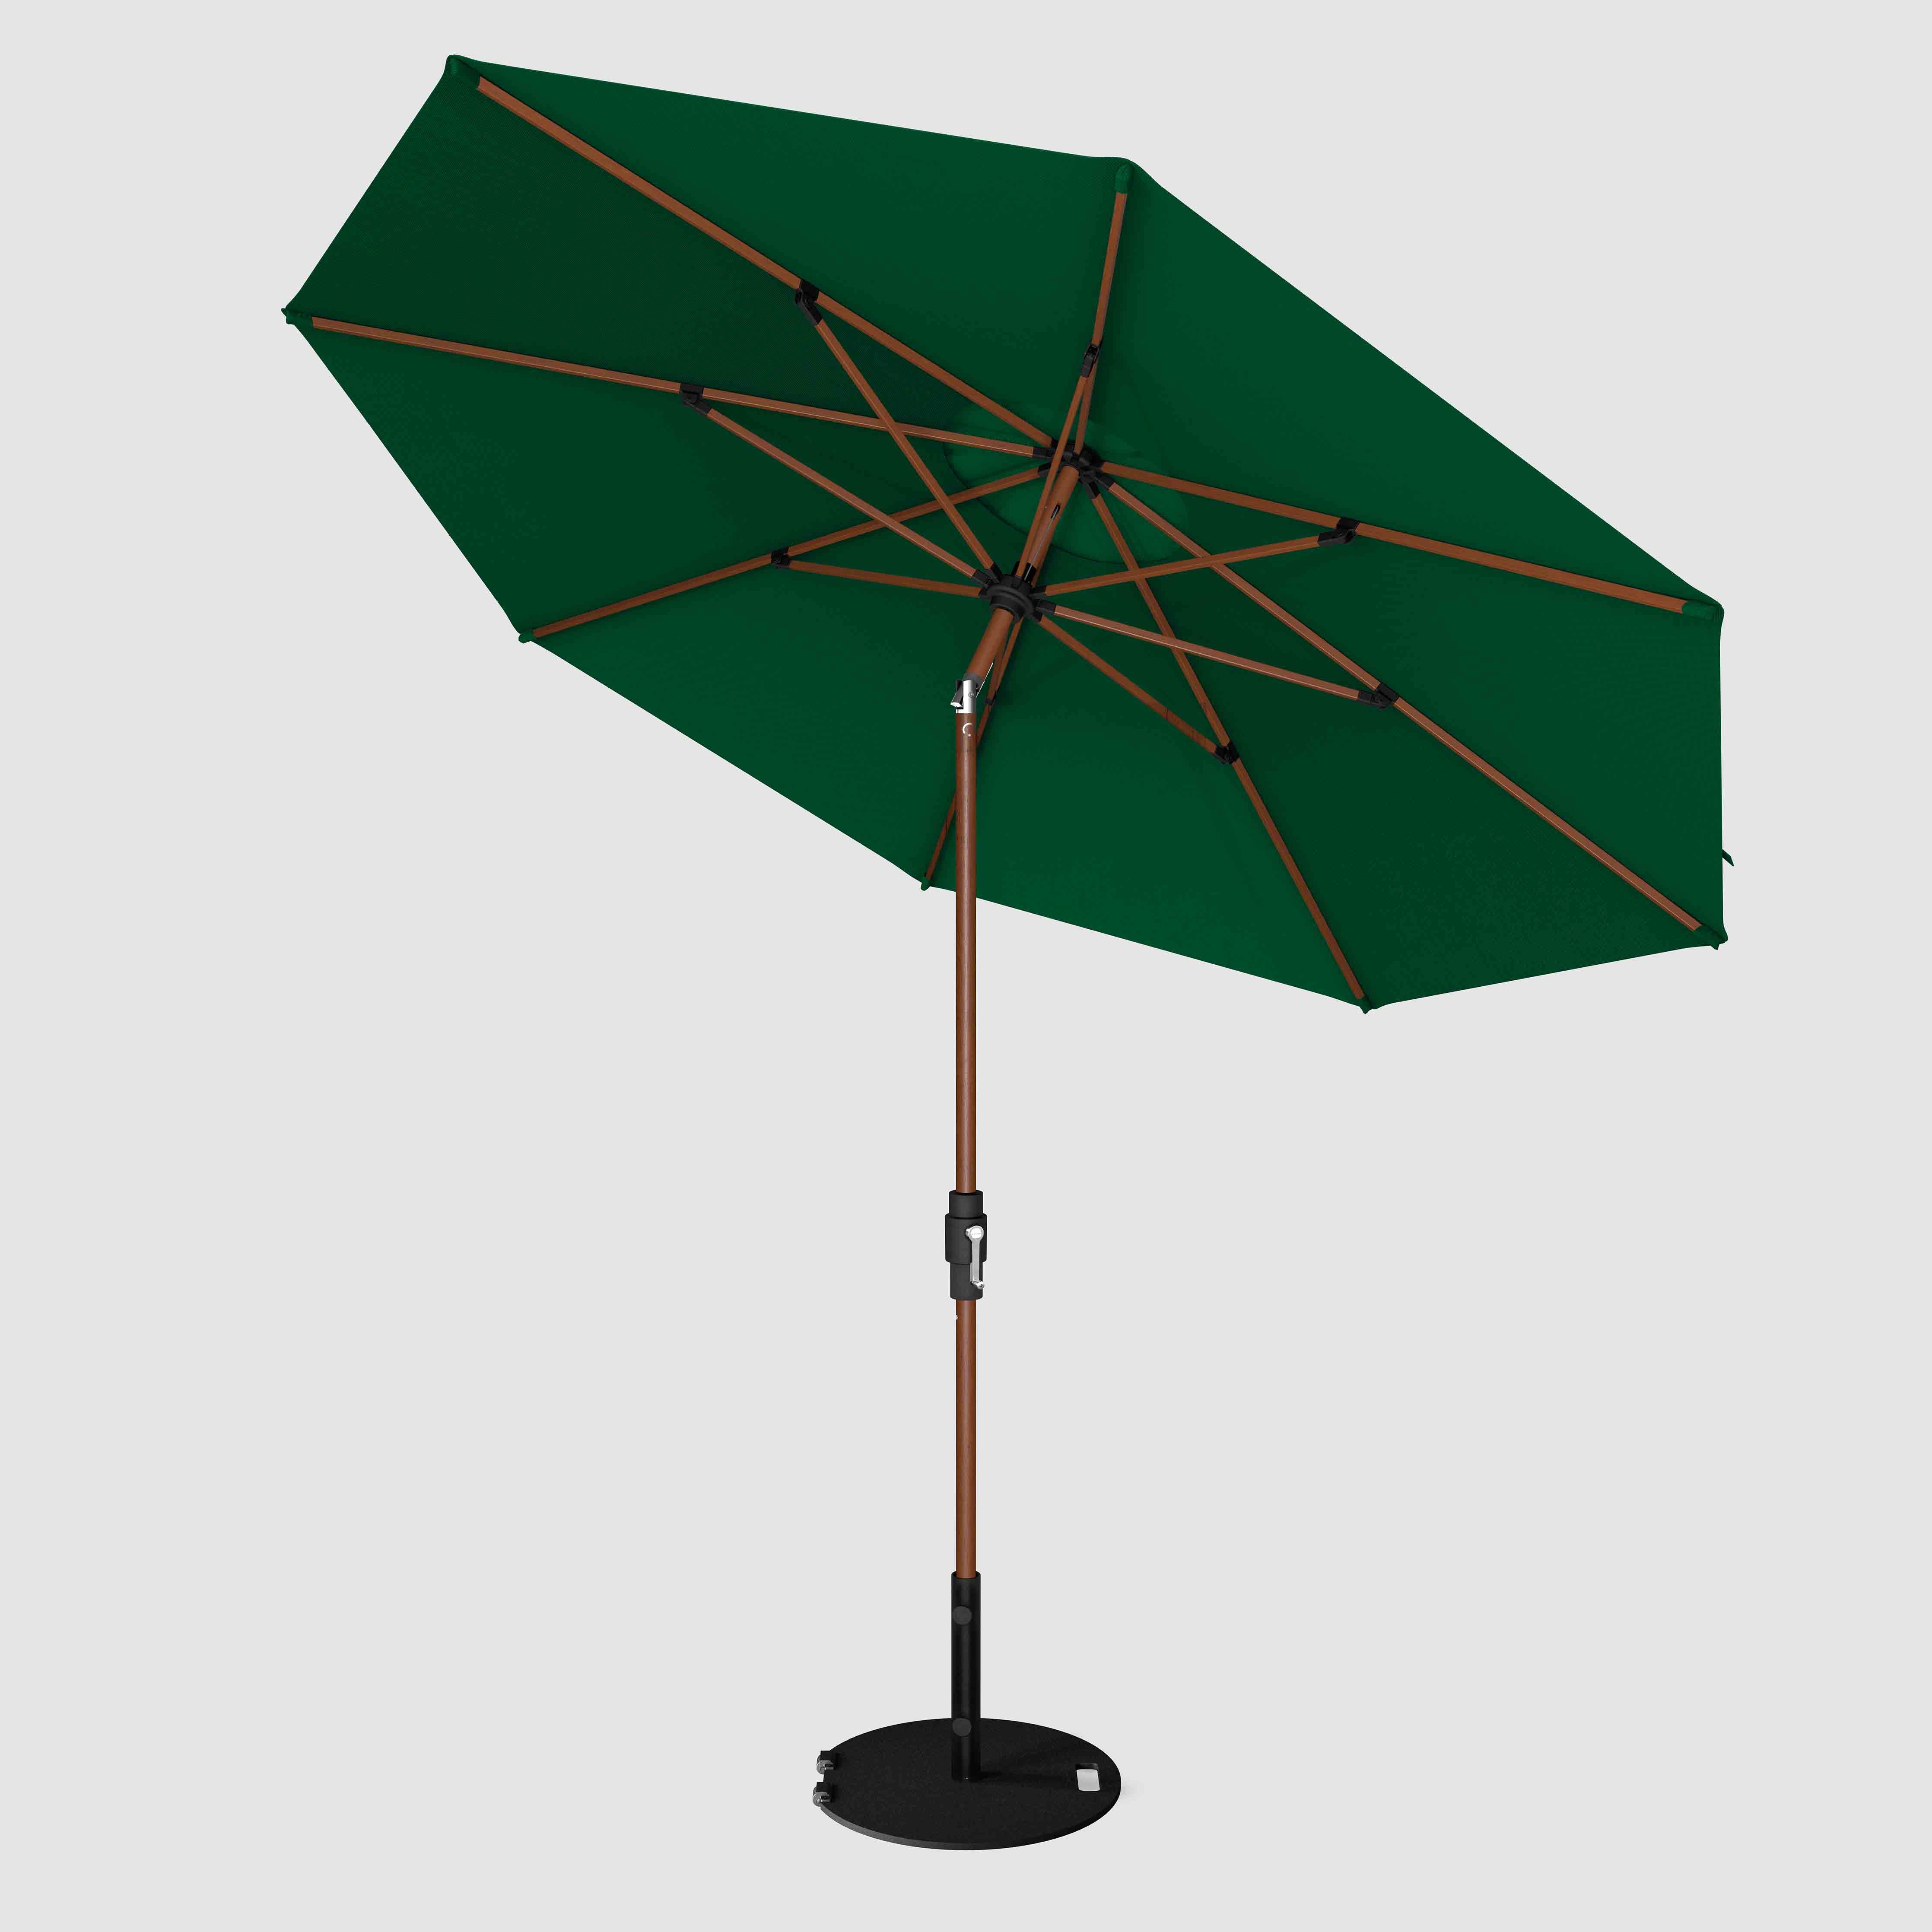 The Wooden 2™ - Sunbrella Verde Bosque